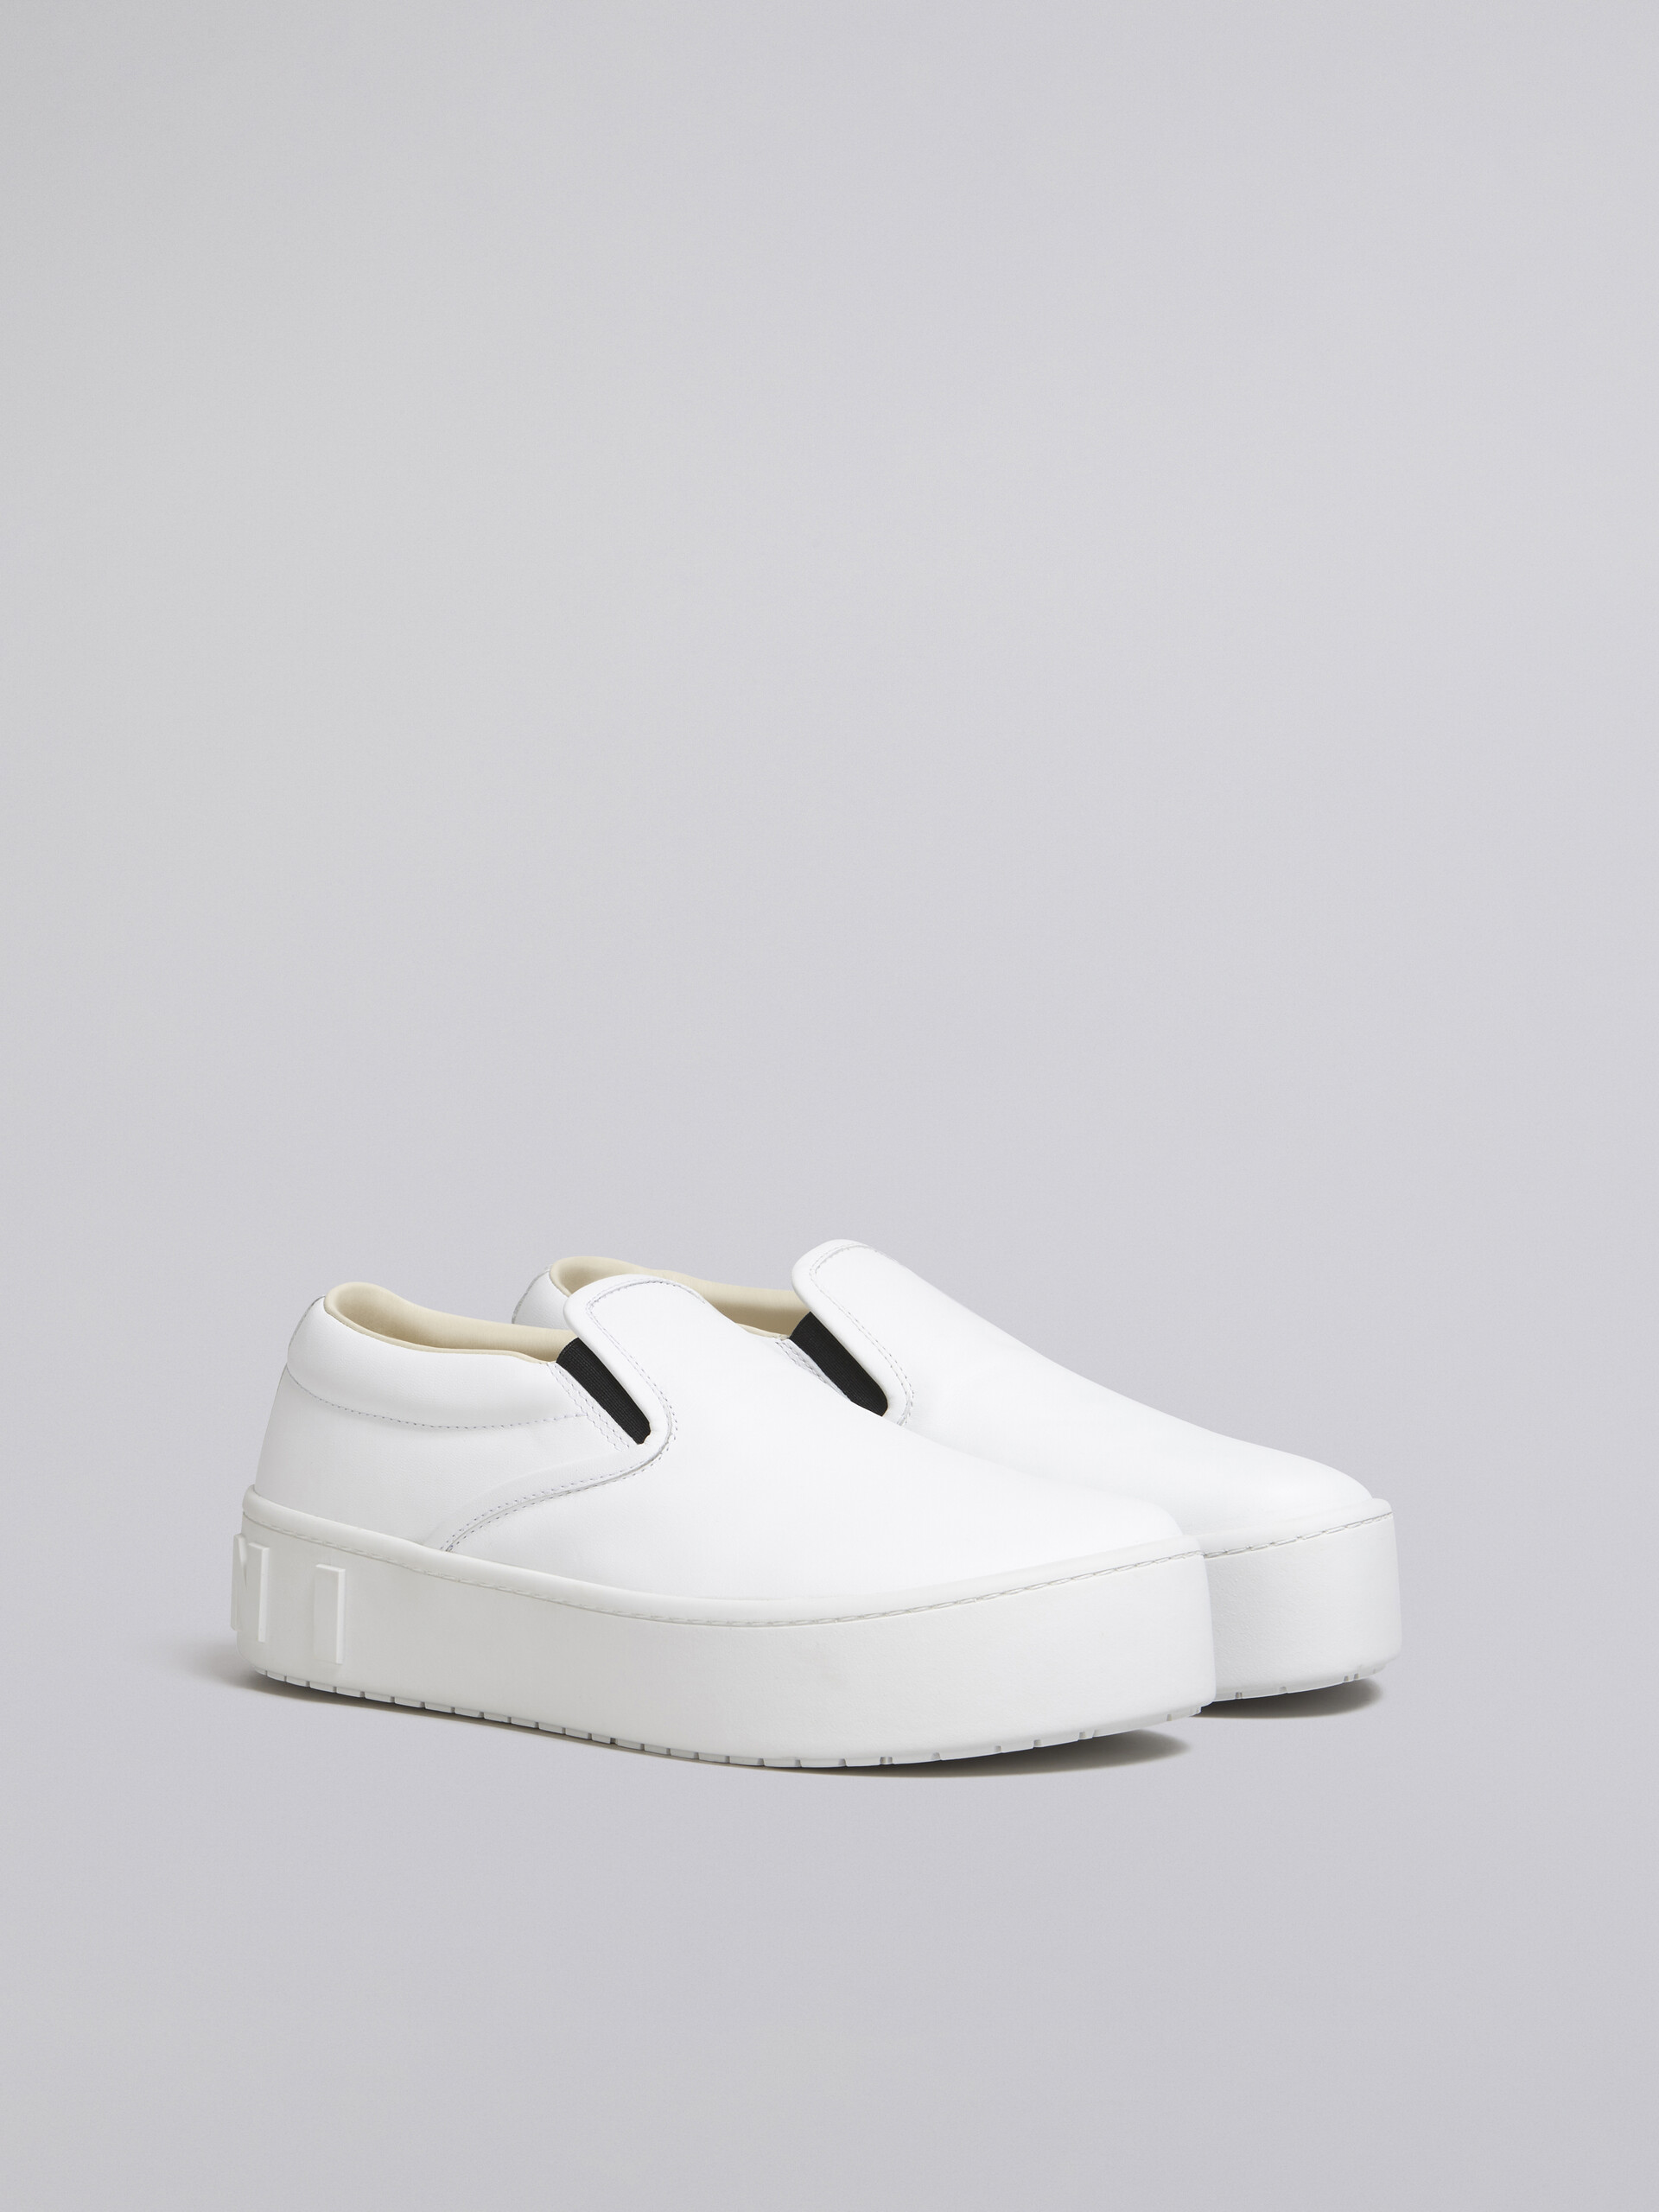 Sneaker slip-on in vitello bianco con maxi logo Marni in rilievo - Sneakers - Image 2